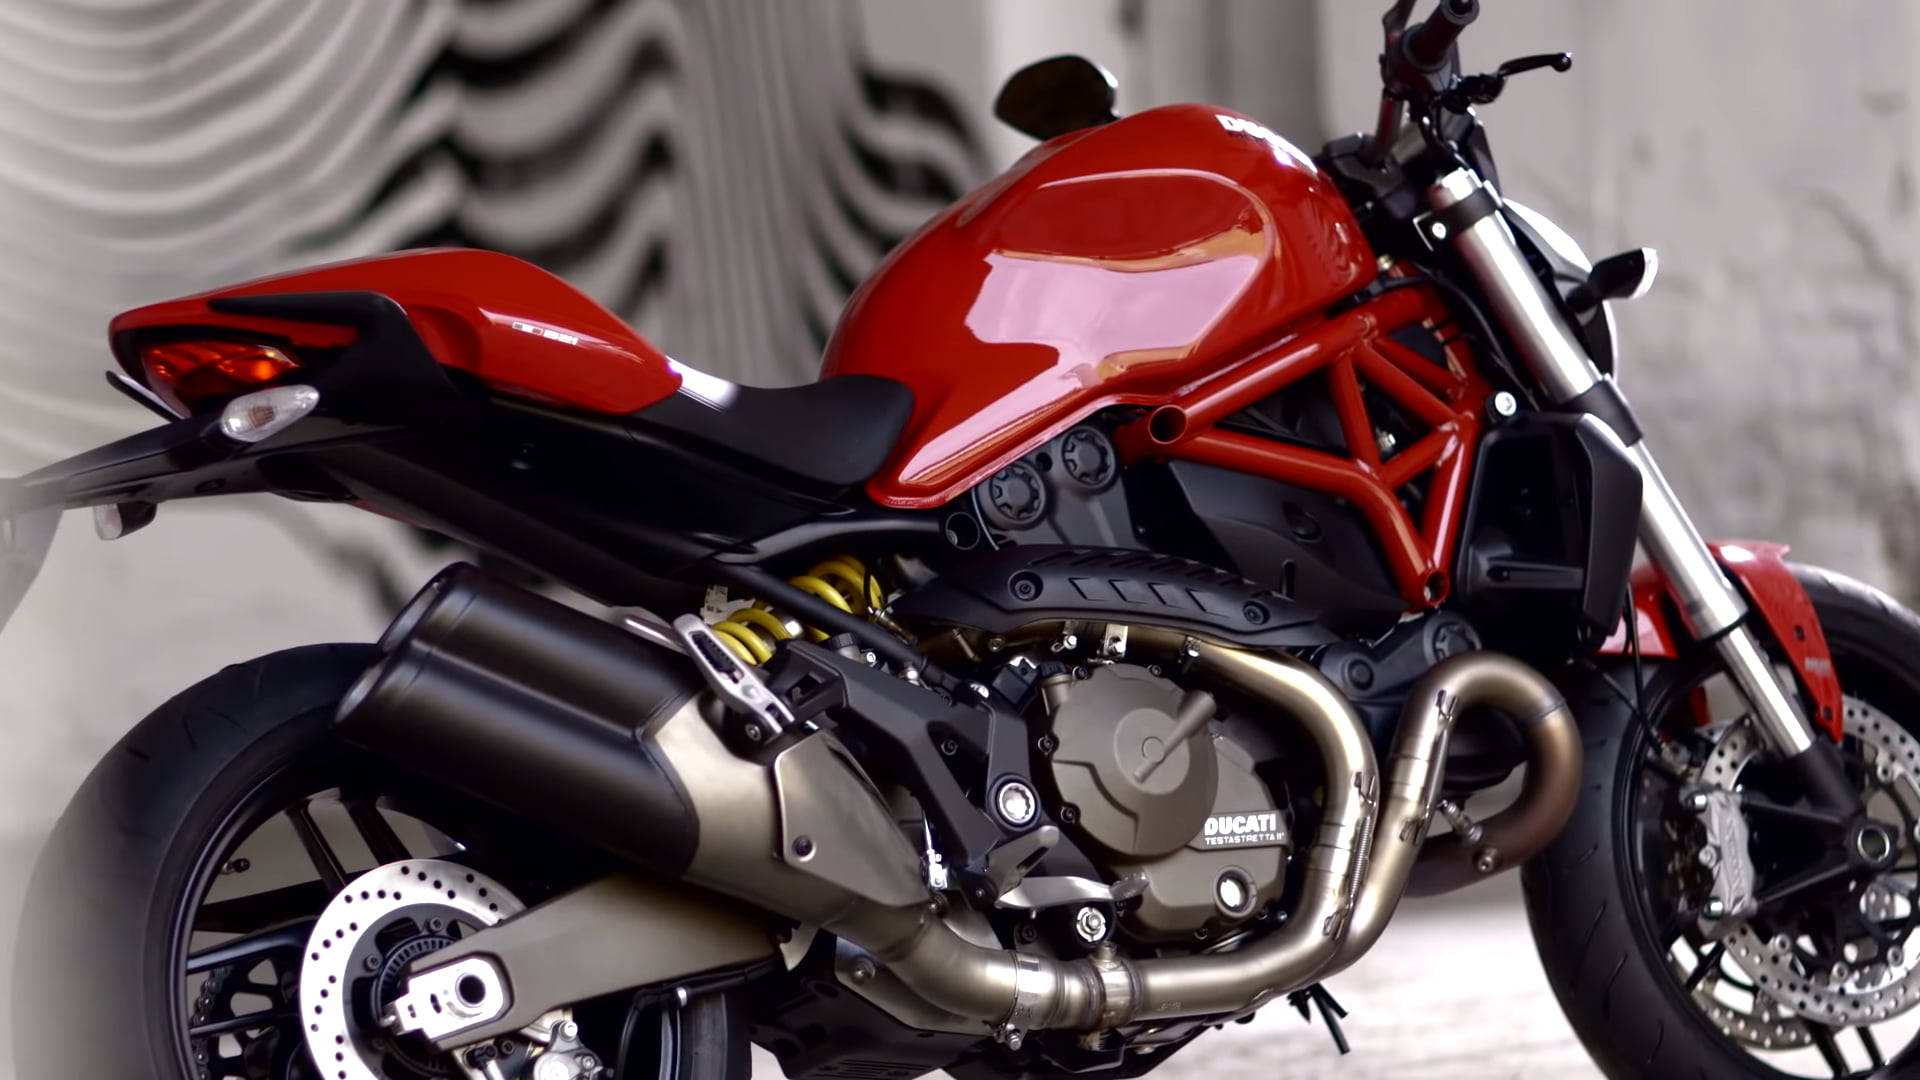 Ducati Monster 1200 - A High Killer Performance. Background